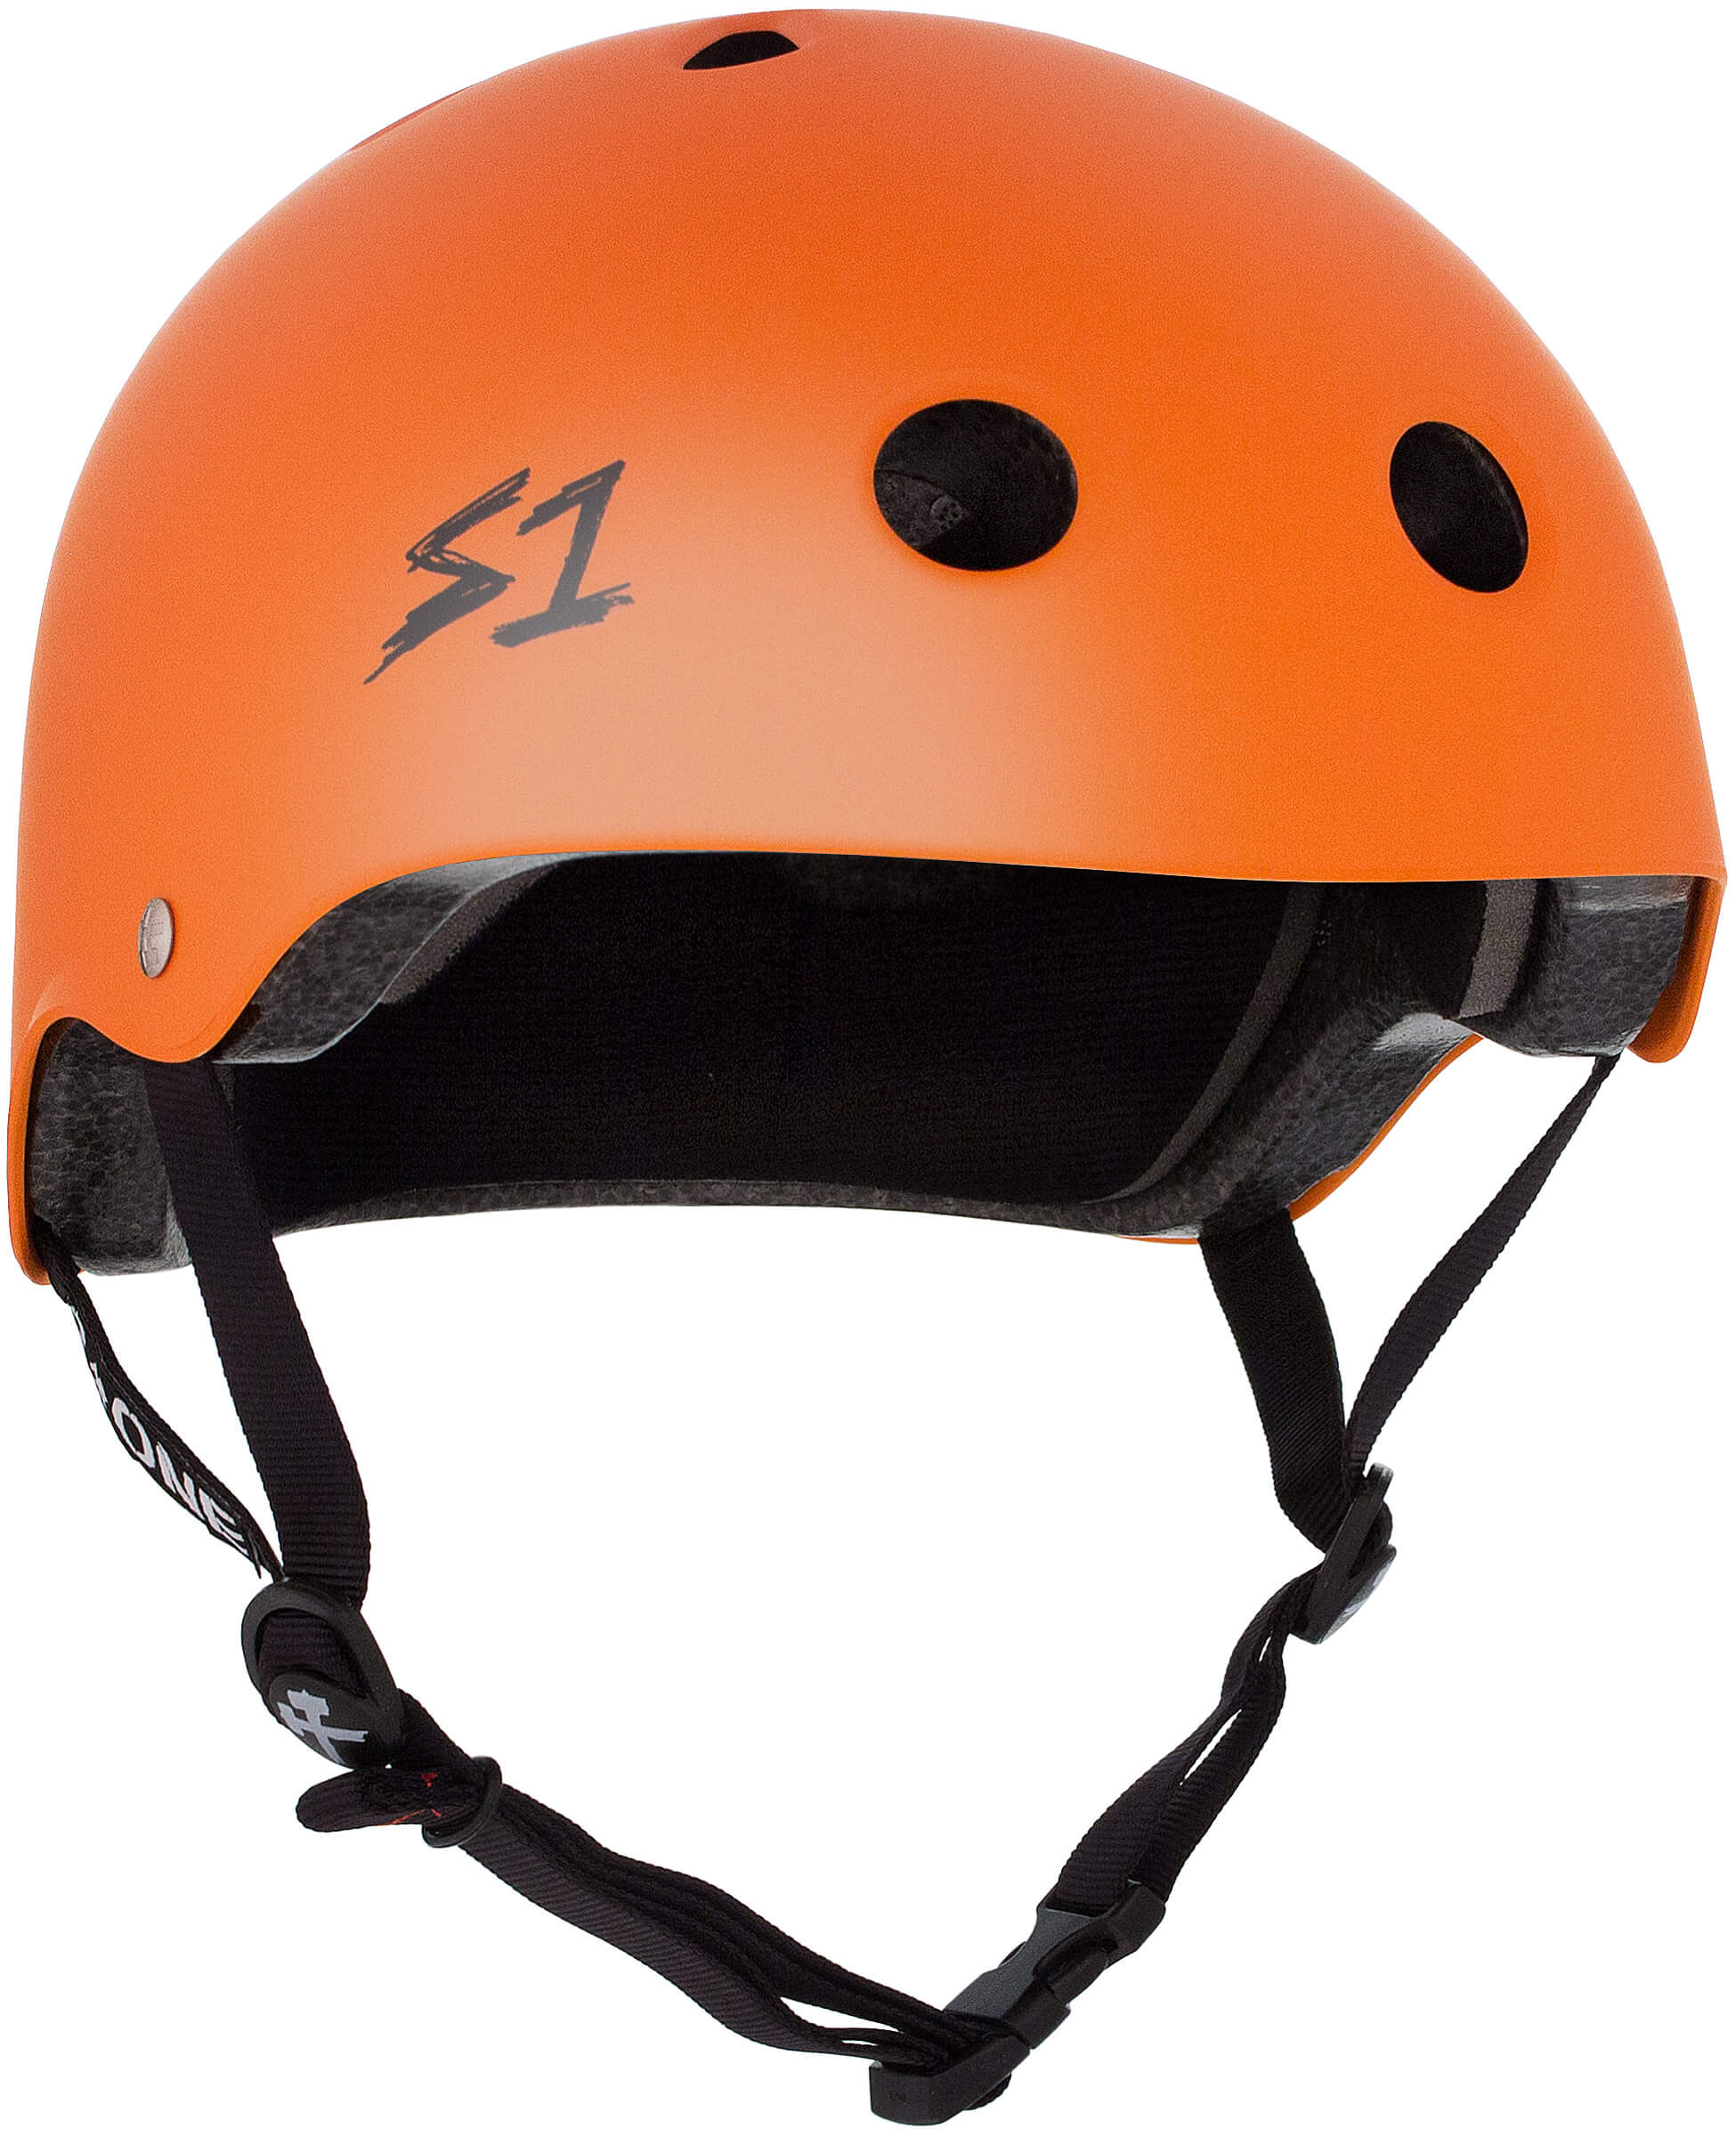 S1 Lifer Helmet - Mast black helmet with black straps